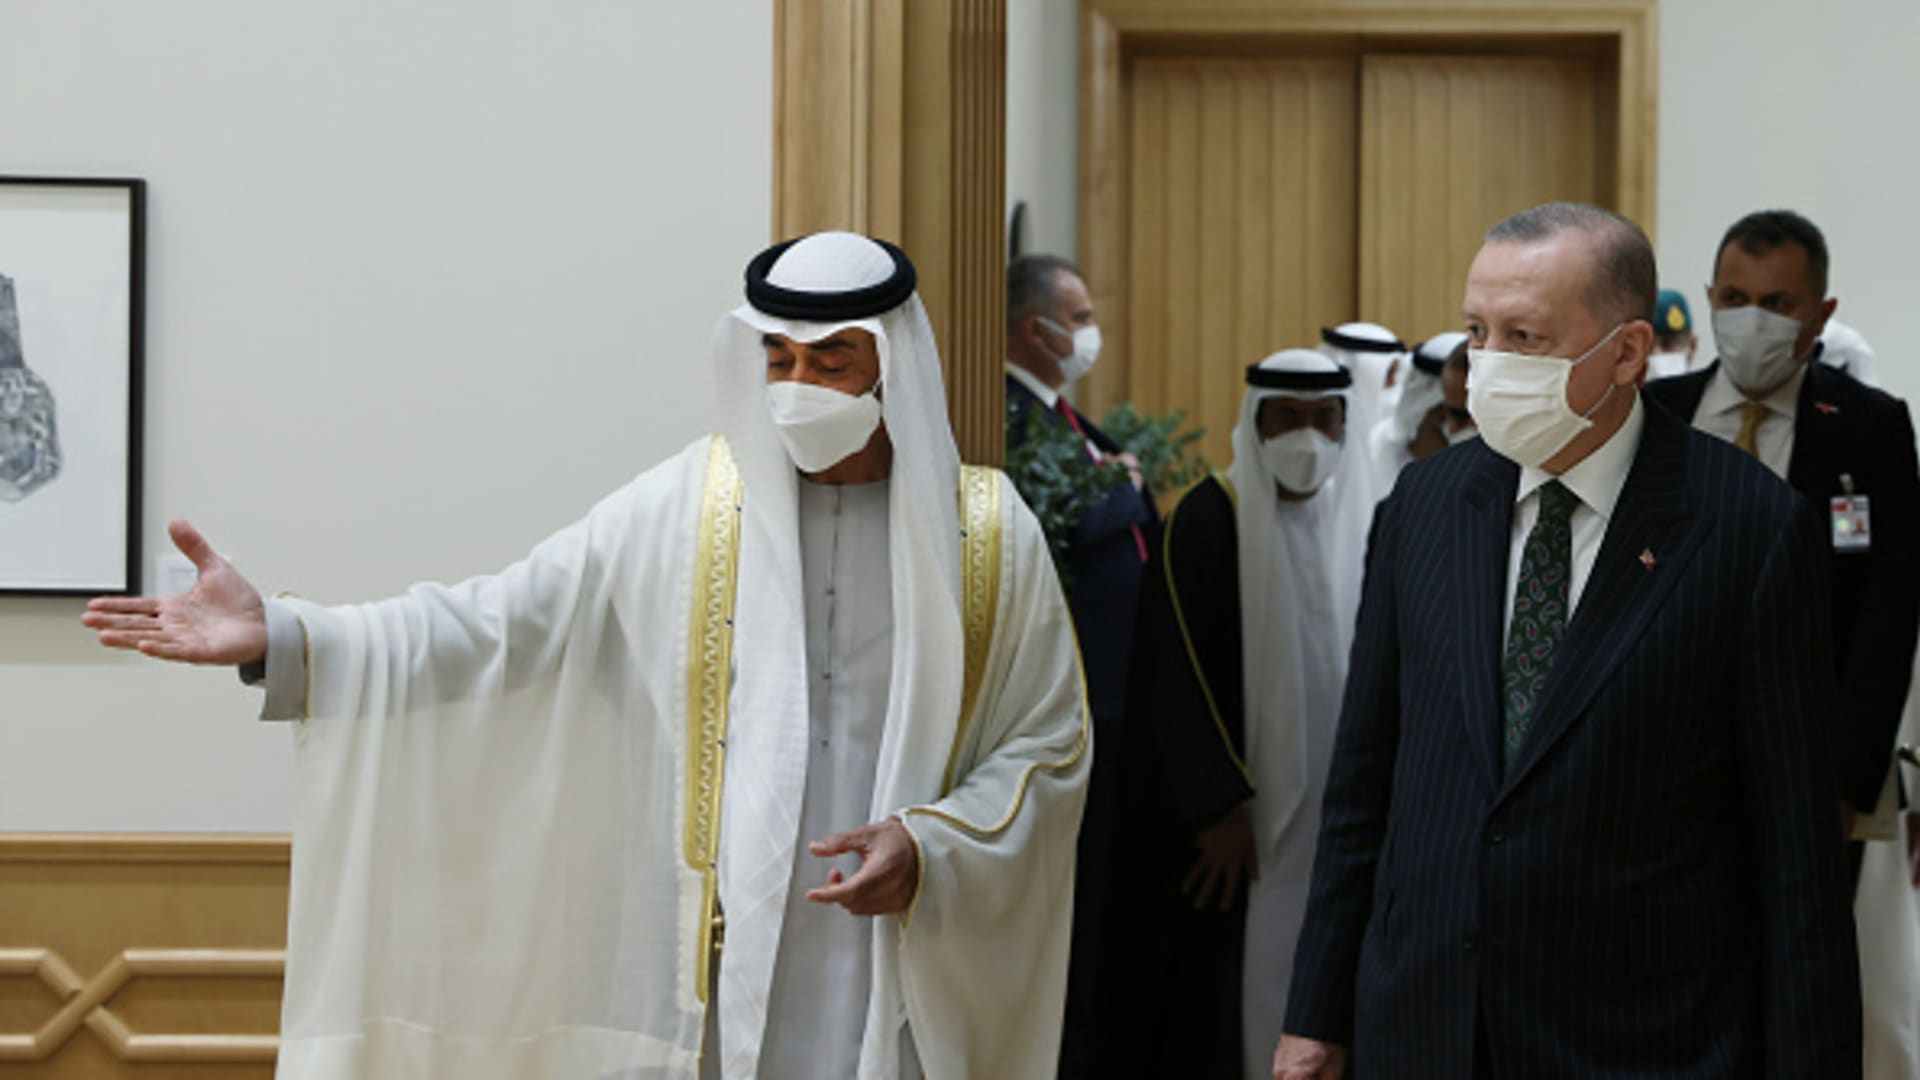 President of Turkey, Recep Tayyip Erdogan, and Mohammed bin Zayed Al Nahyan met on February 14, 2022 in Abu Dhabi, United Arab Emirates.